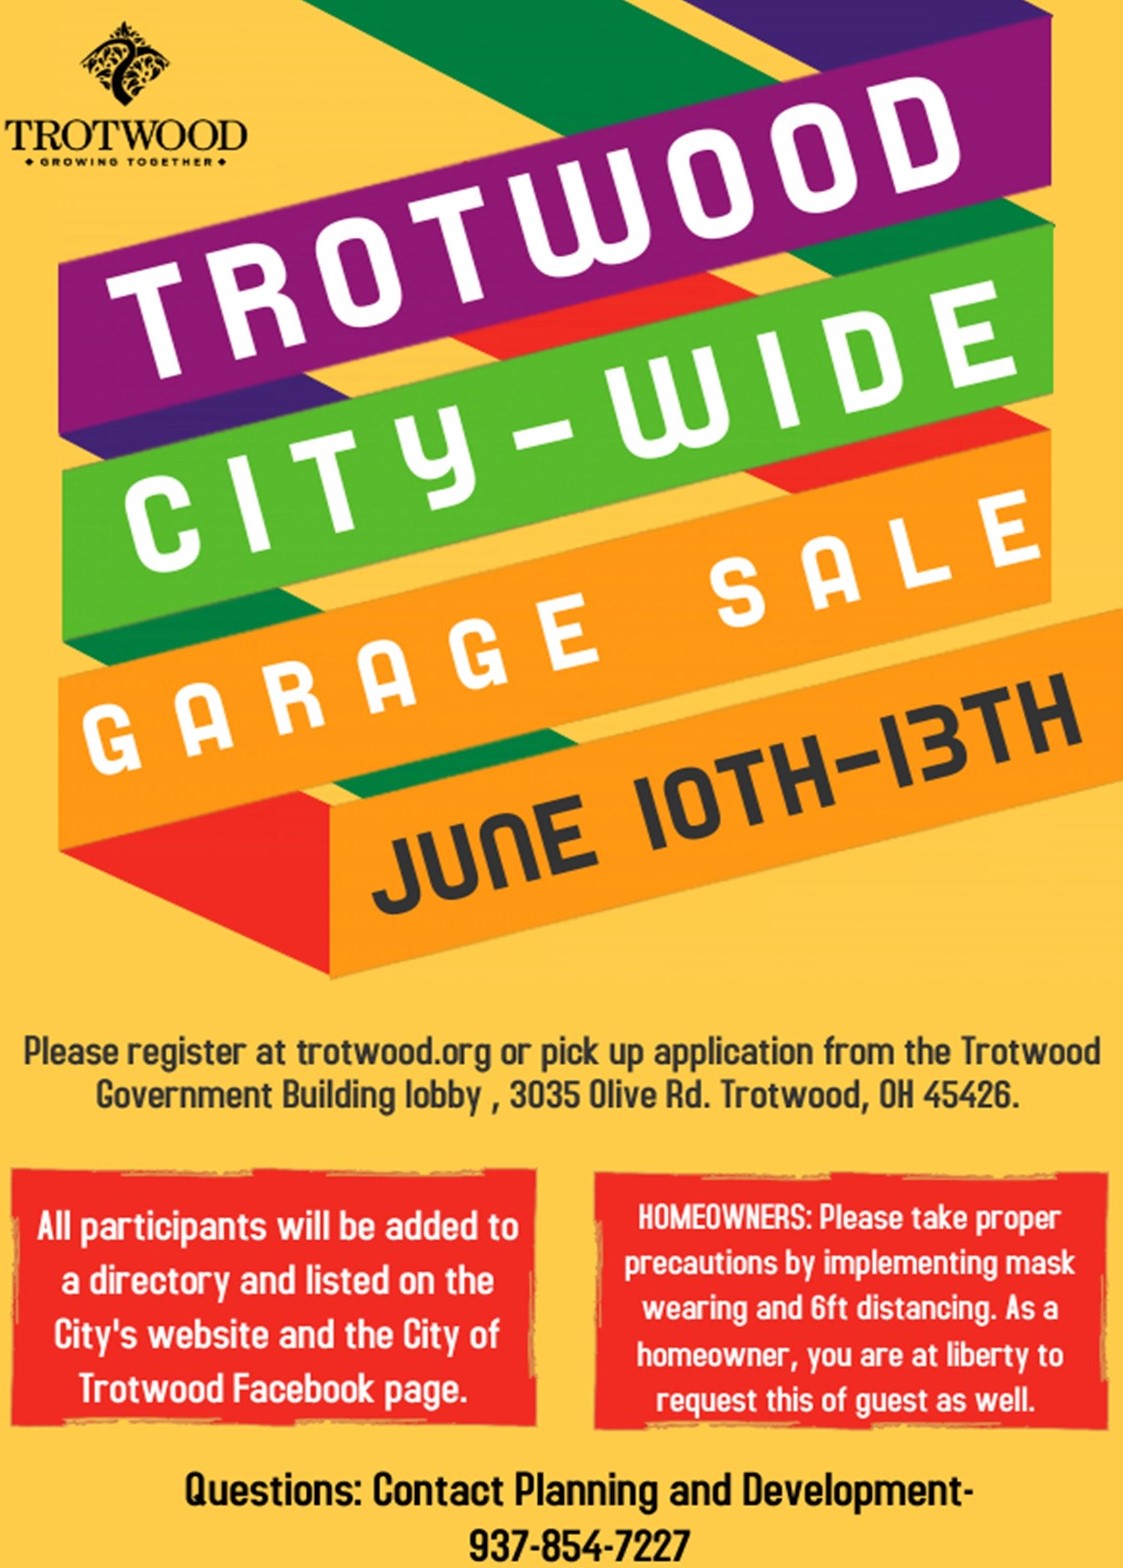 Citywide Garage Sale Application Deadline June 9th Trotwood, Ohio